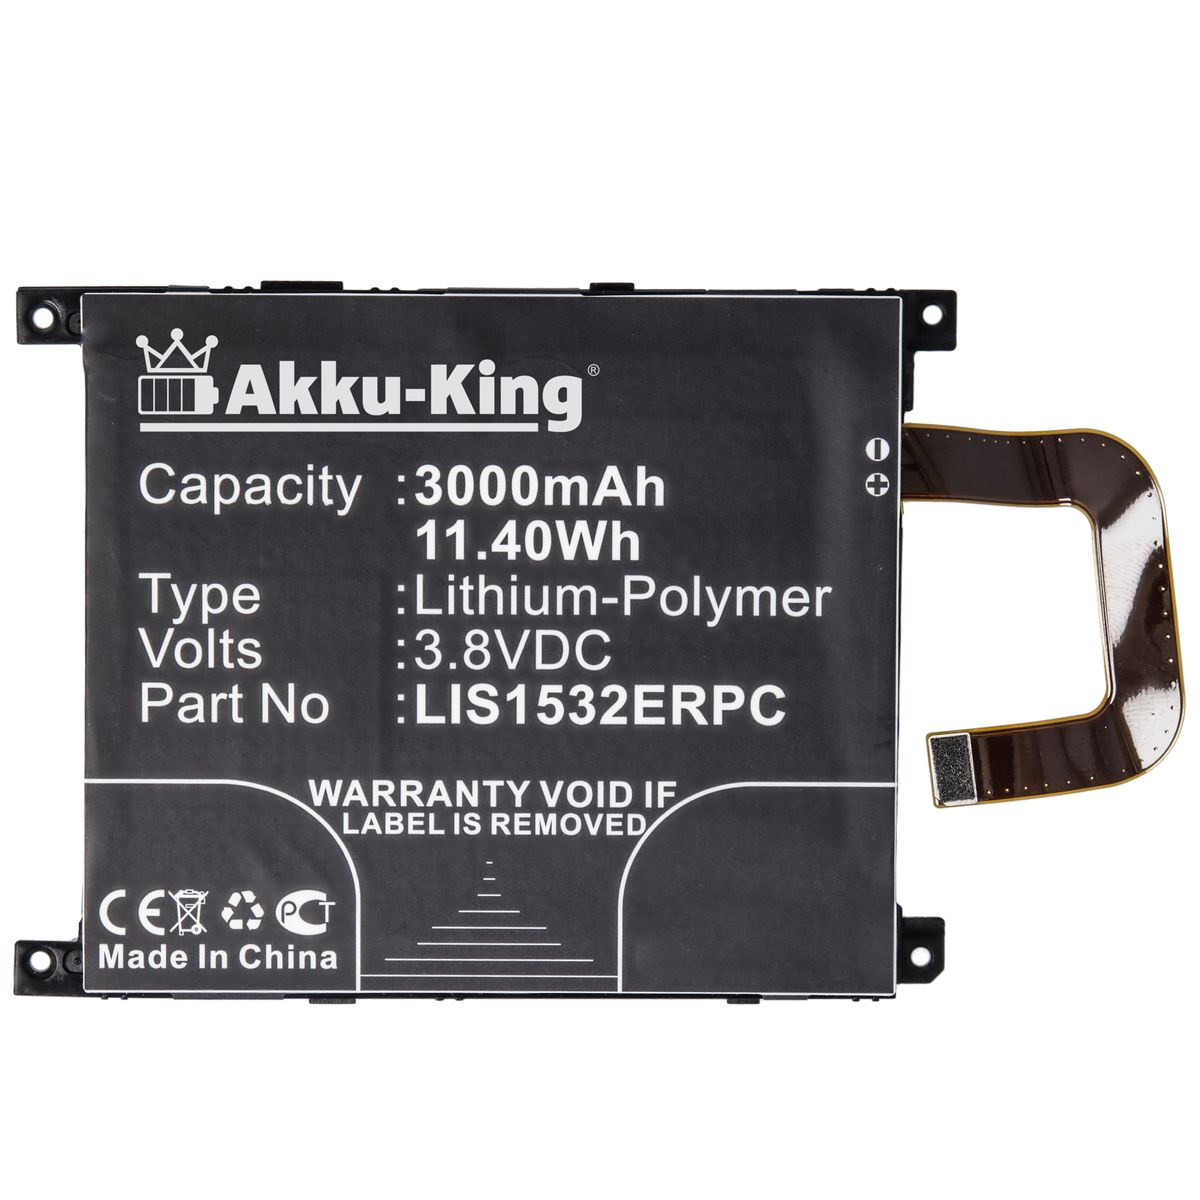 mit 3.8 Volt, Sony AKKU-KING Handy-Akku, kompatibel Li-Polymer 3000mAh Akku LIS1532ERPC